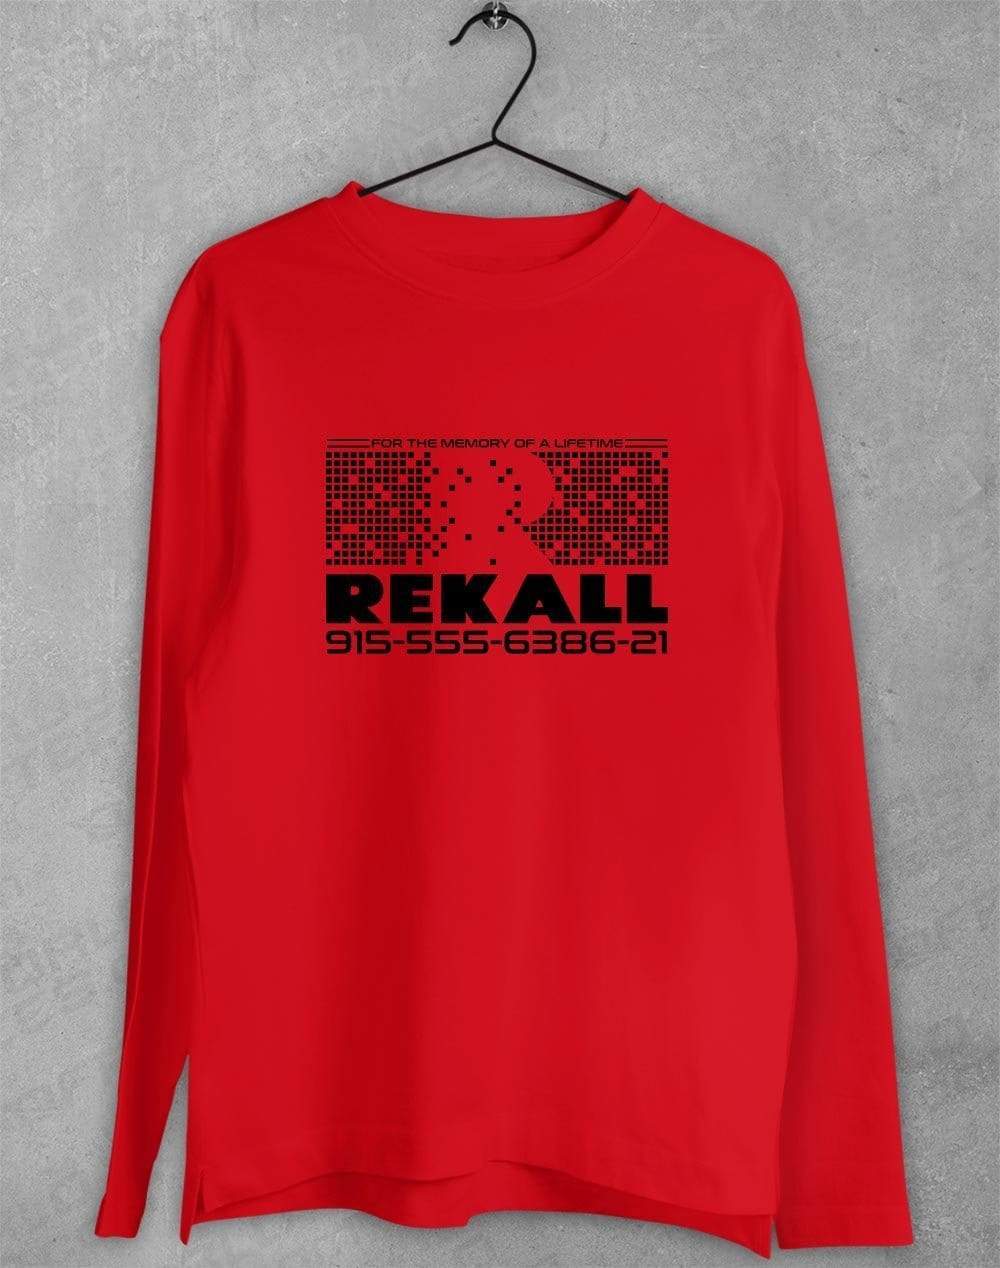 Rekall Long Sleeve T-Shirt S / Red  - Off World Tees